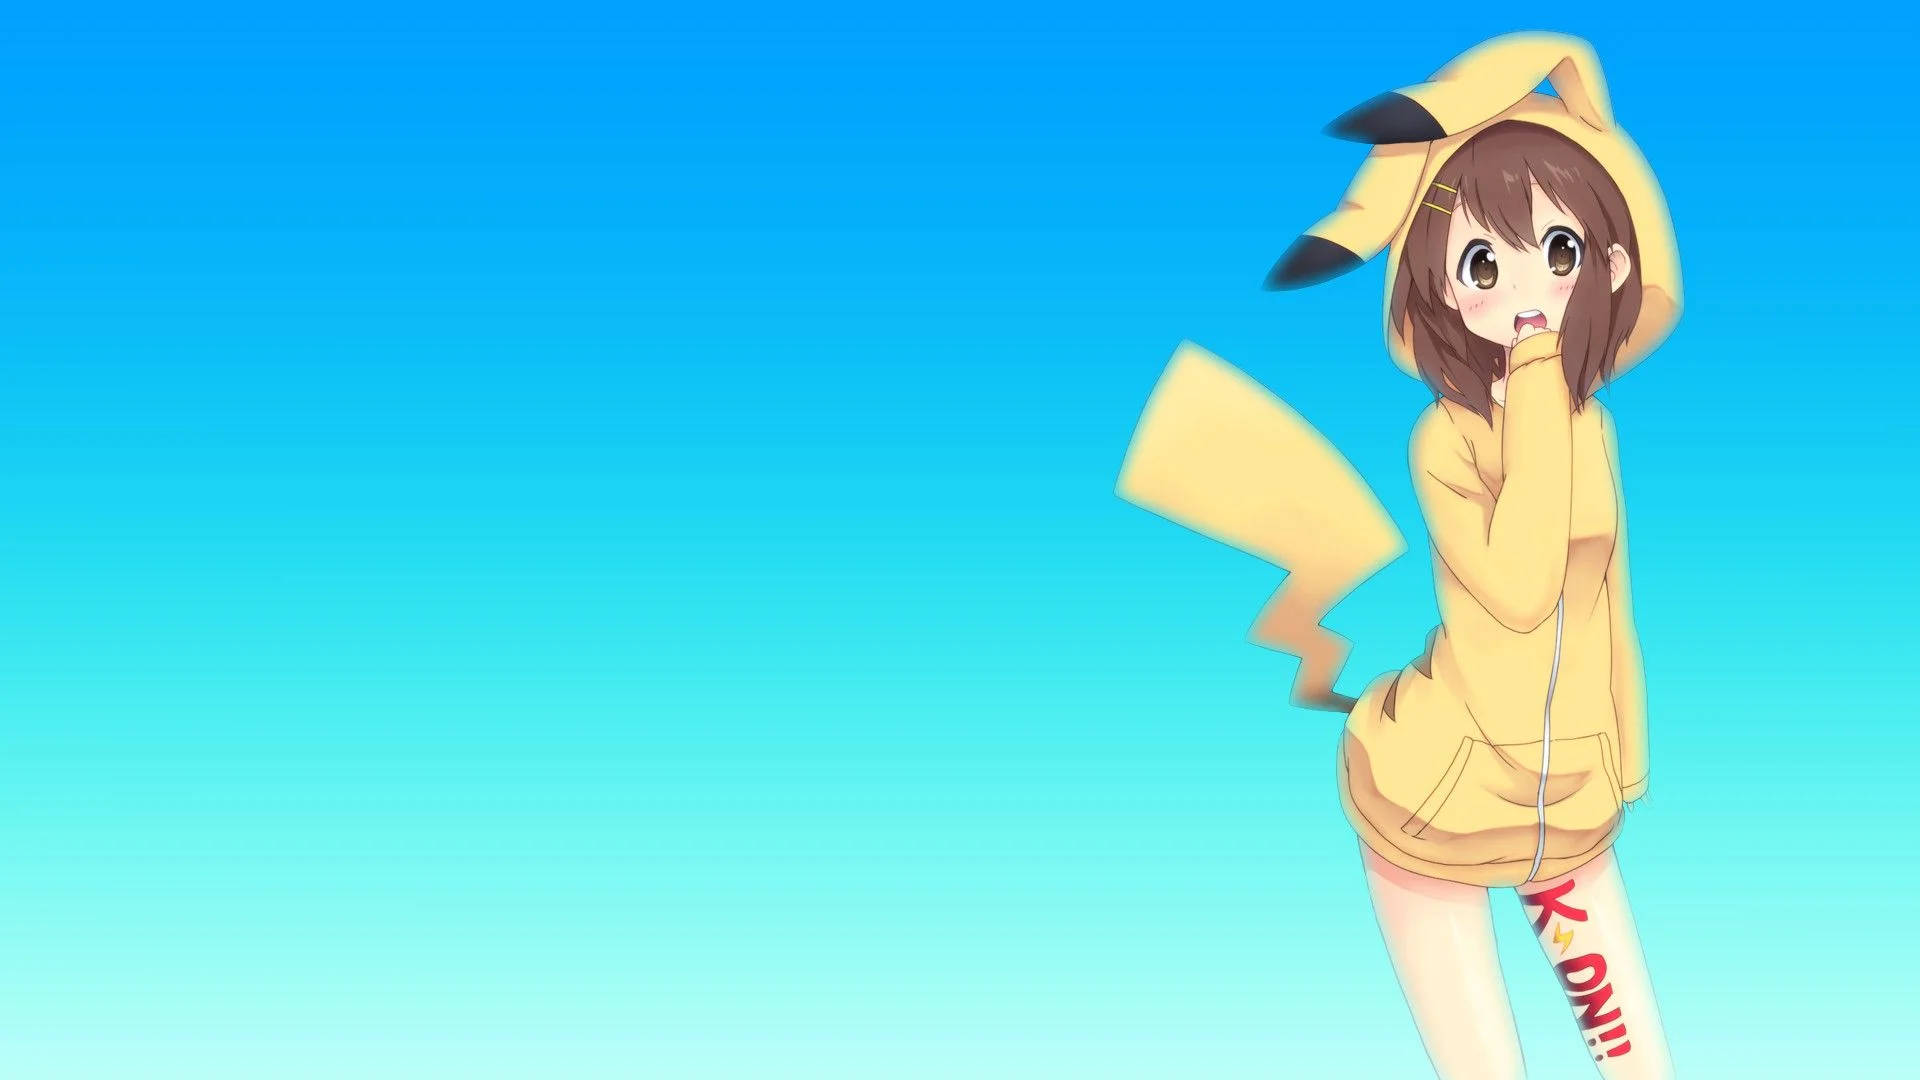 Pikachu Anime Girl Hoodie Background